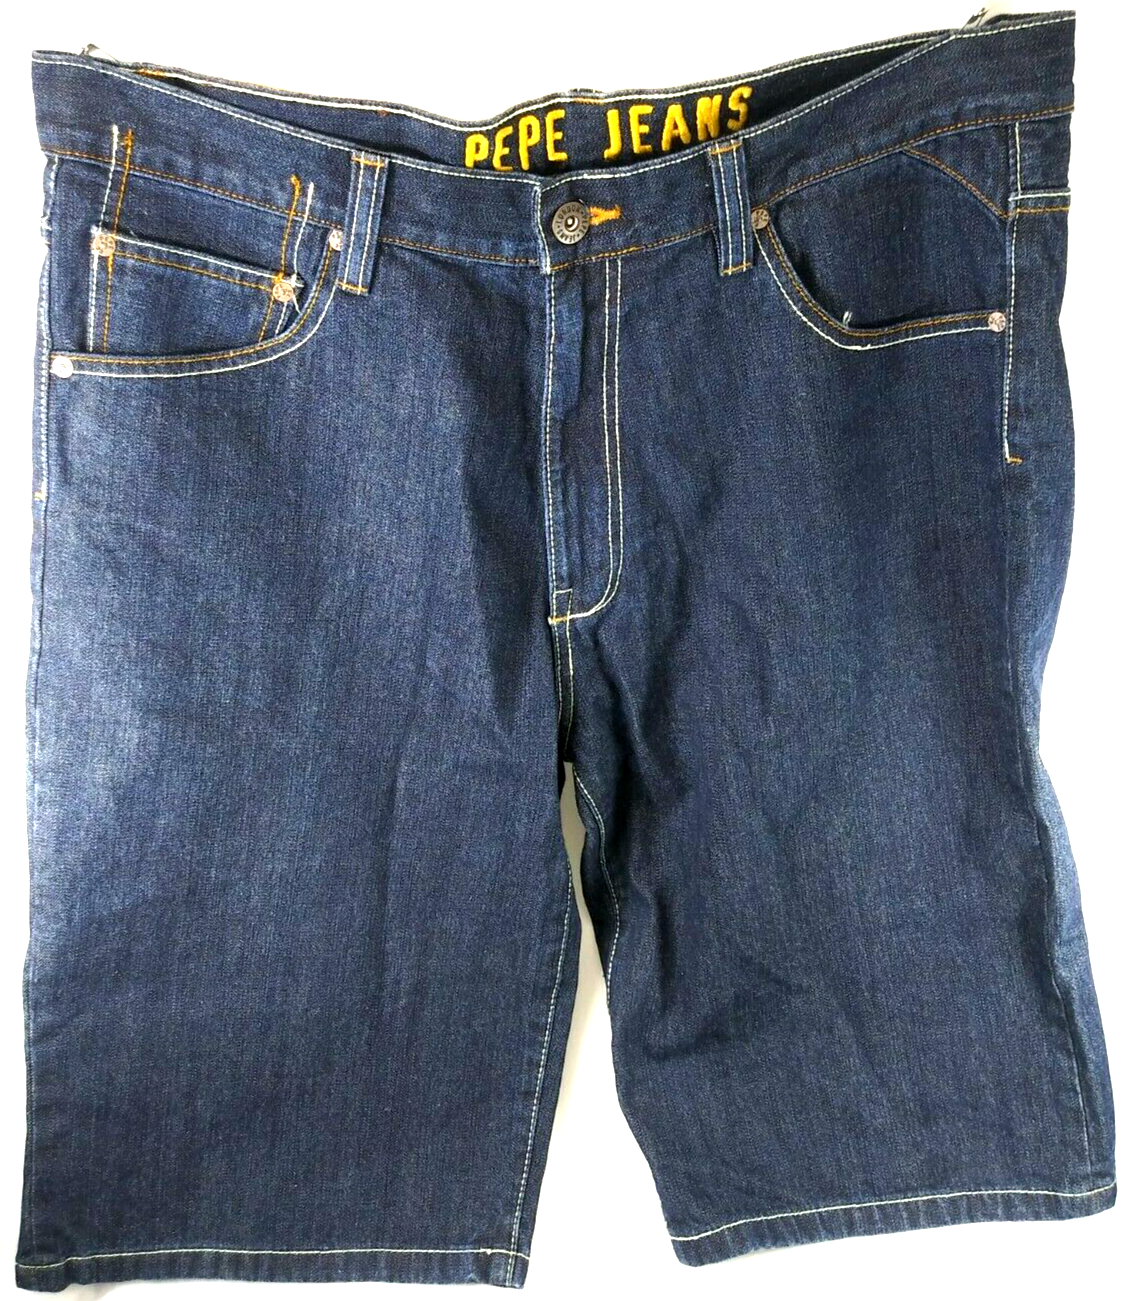 Pepe Jeans Mens Sz 36 Shorts Cotton Denim Dark 11" Inseam eBay